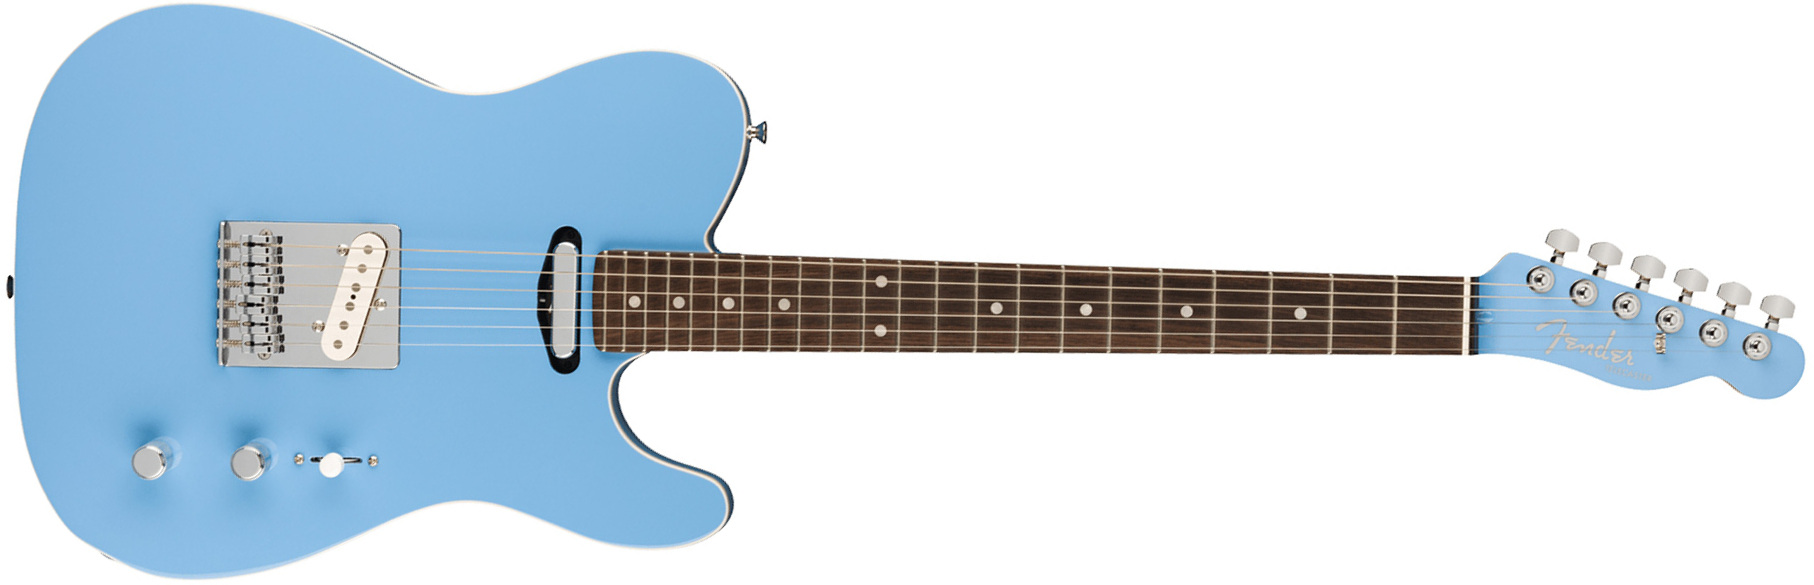 Fender Tele Aerodyne Special Jap 2s Ht Rw - California Blue - Guitarra eléctrica con forma de tel - Main picture